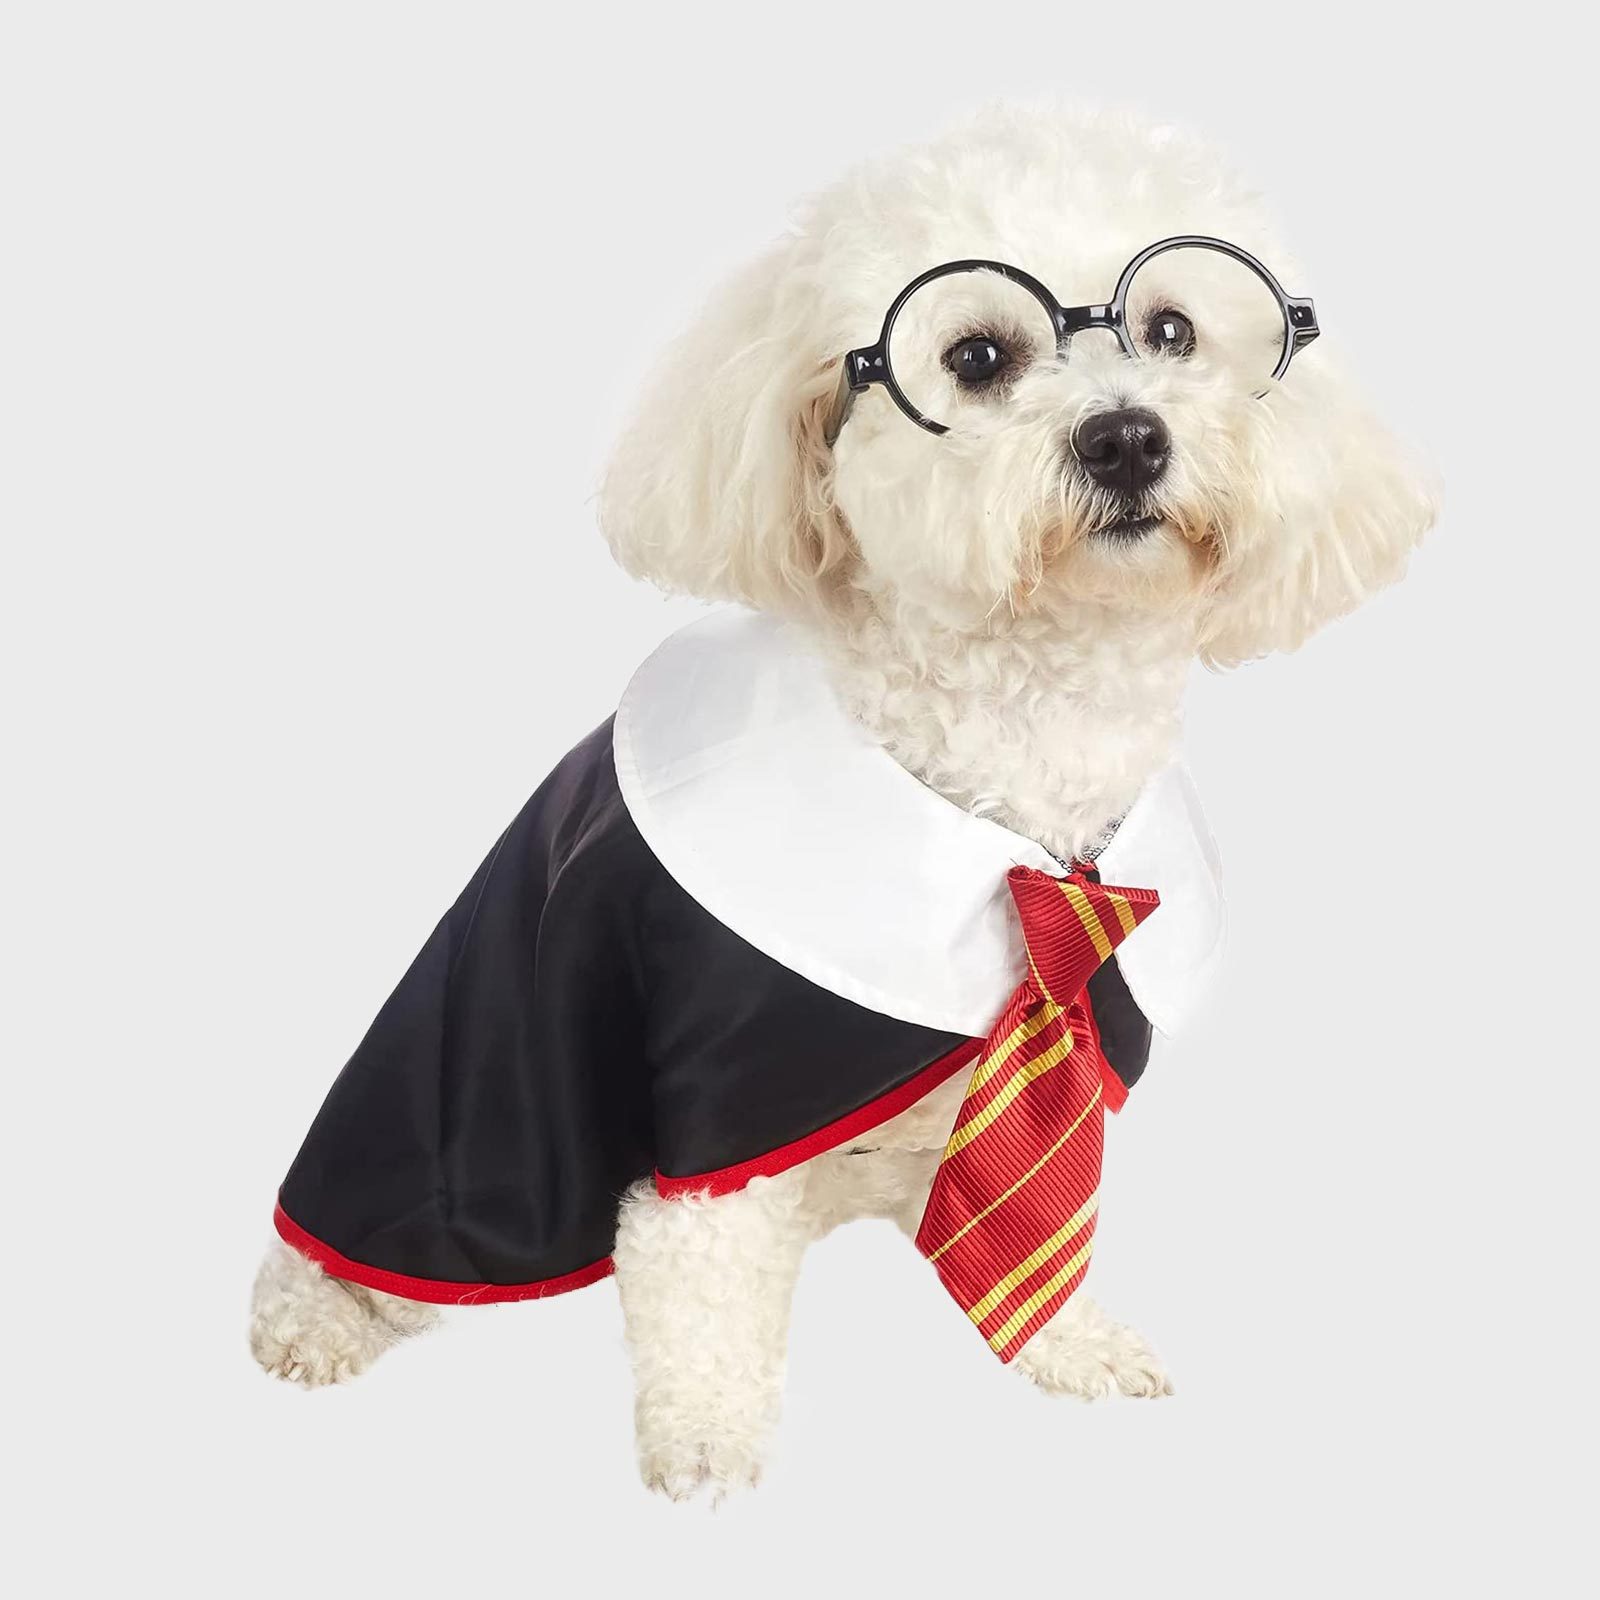 Rd Ecomm Harry Potter Dog Costume Via Amazon.com